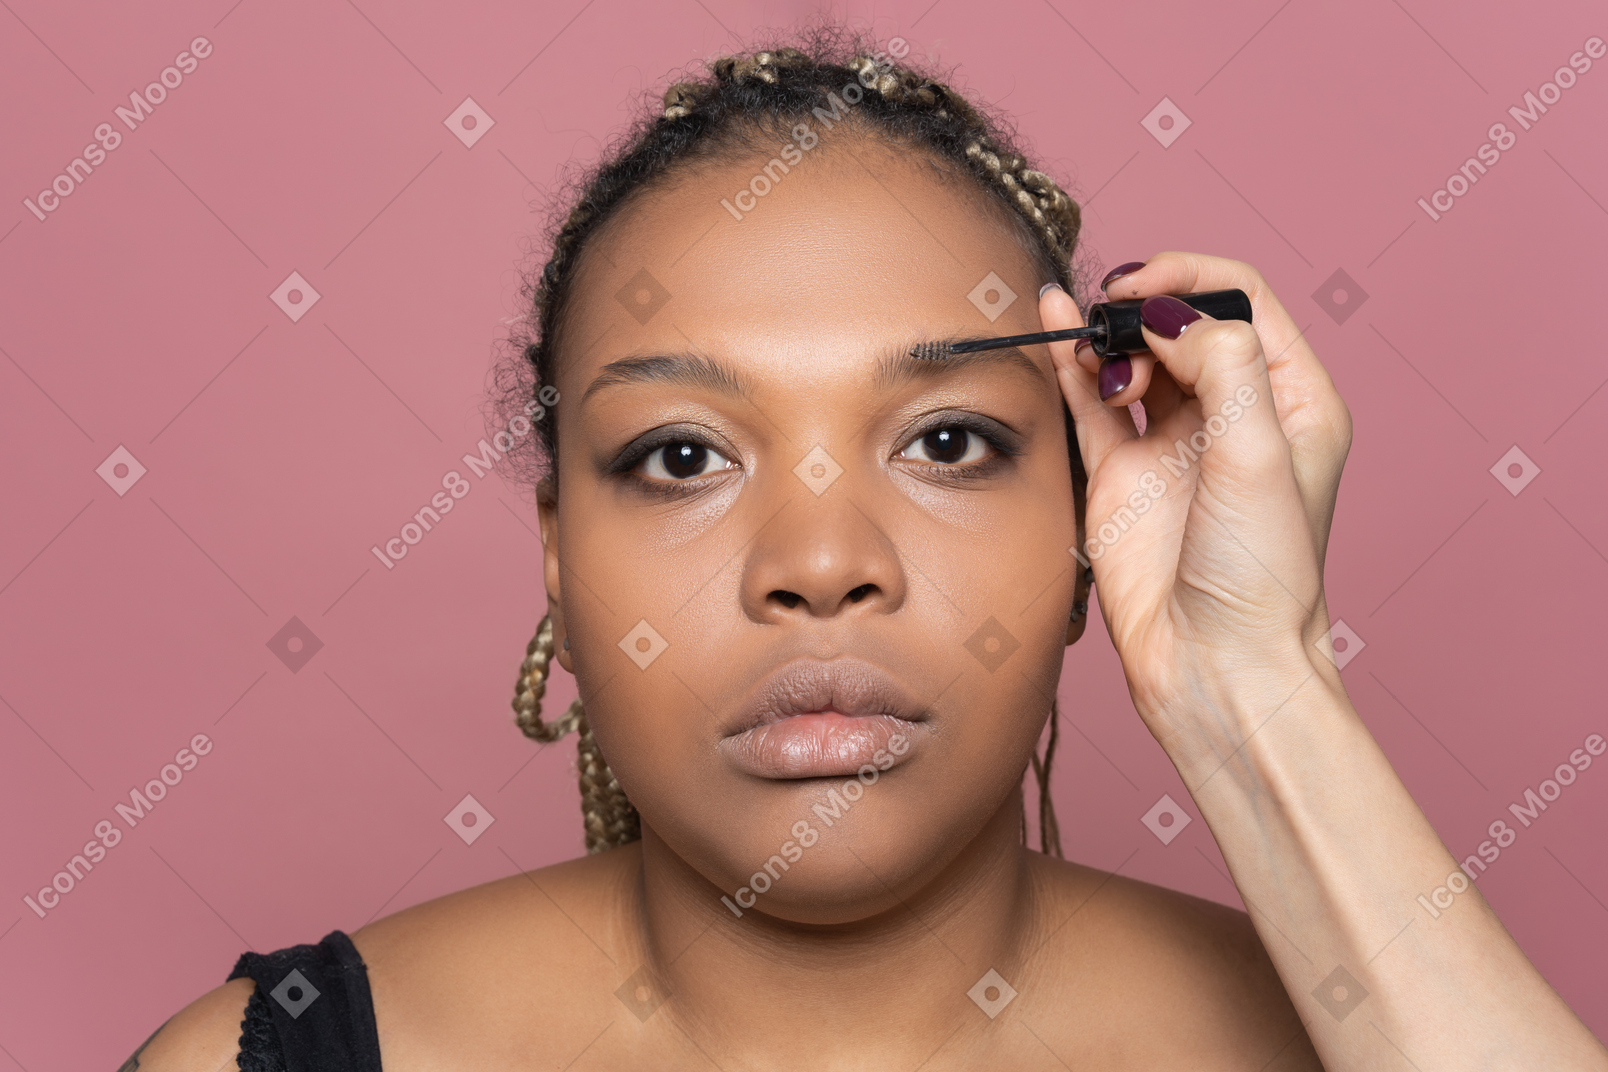 Adjusting eyebrows with brow gel